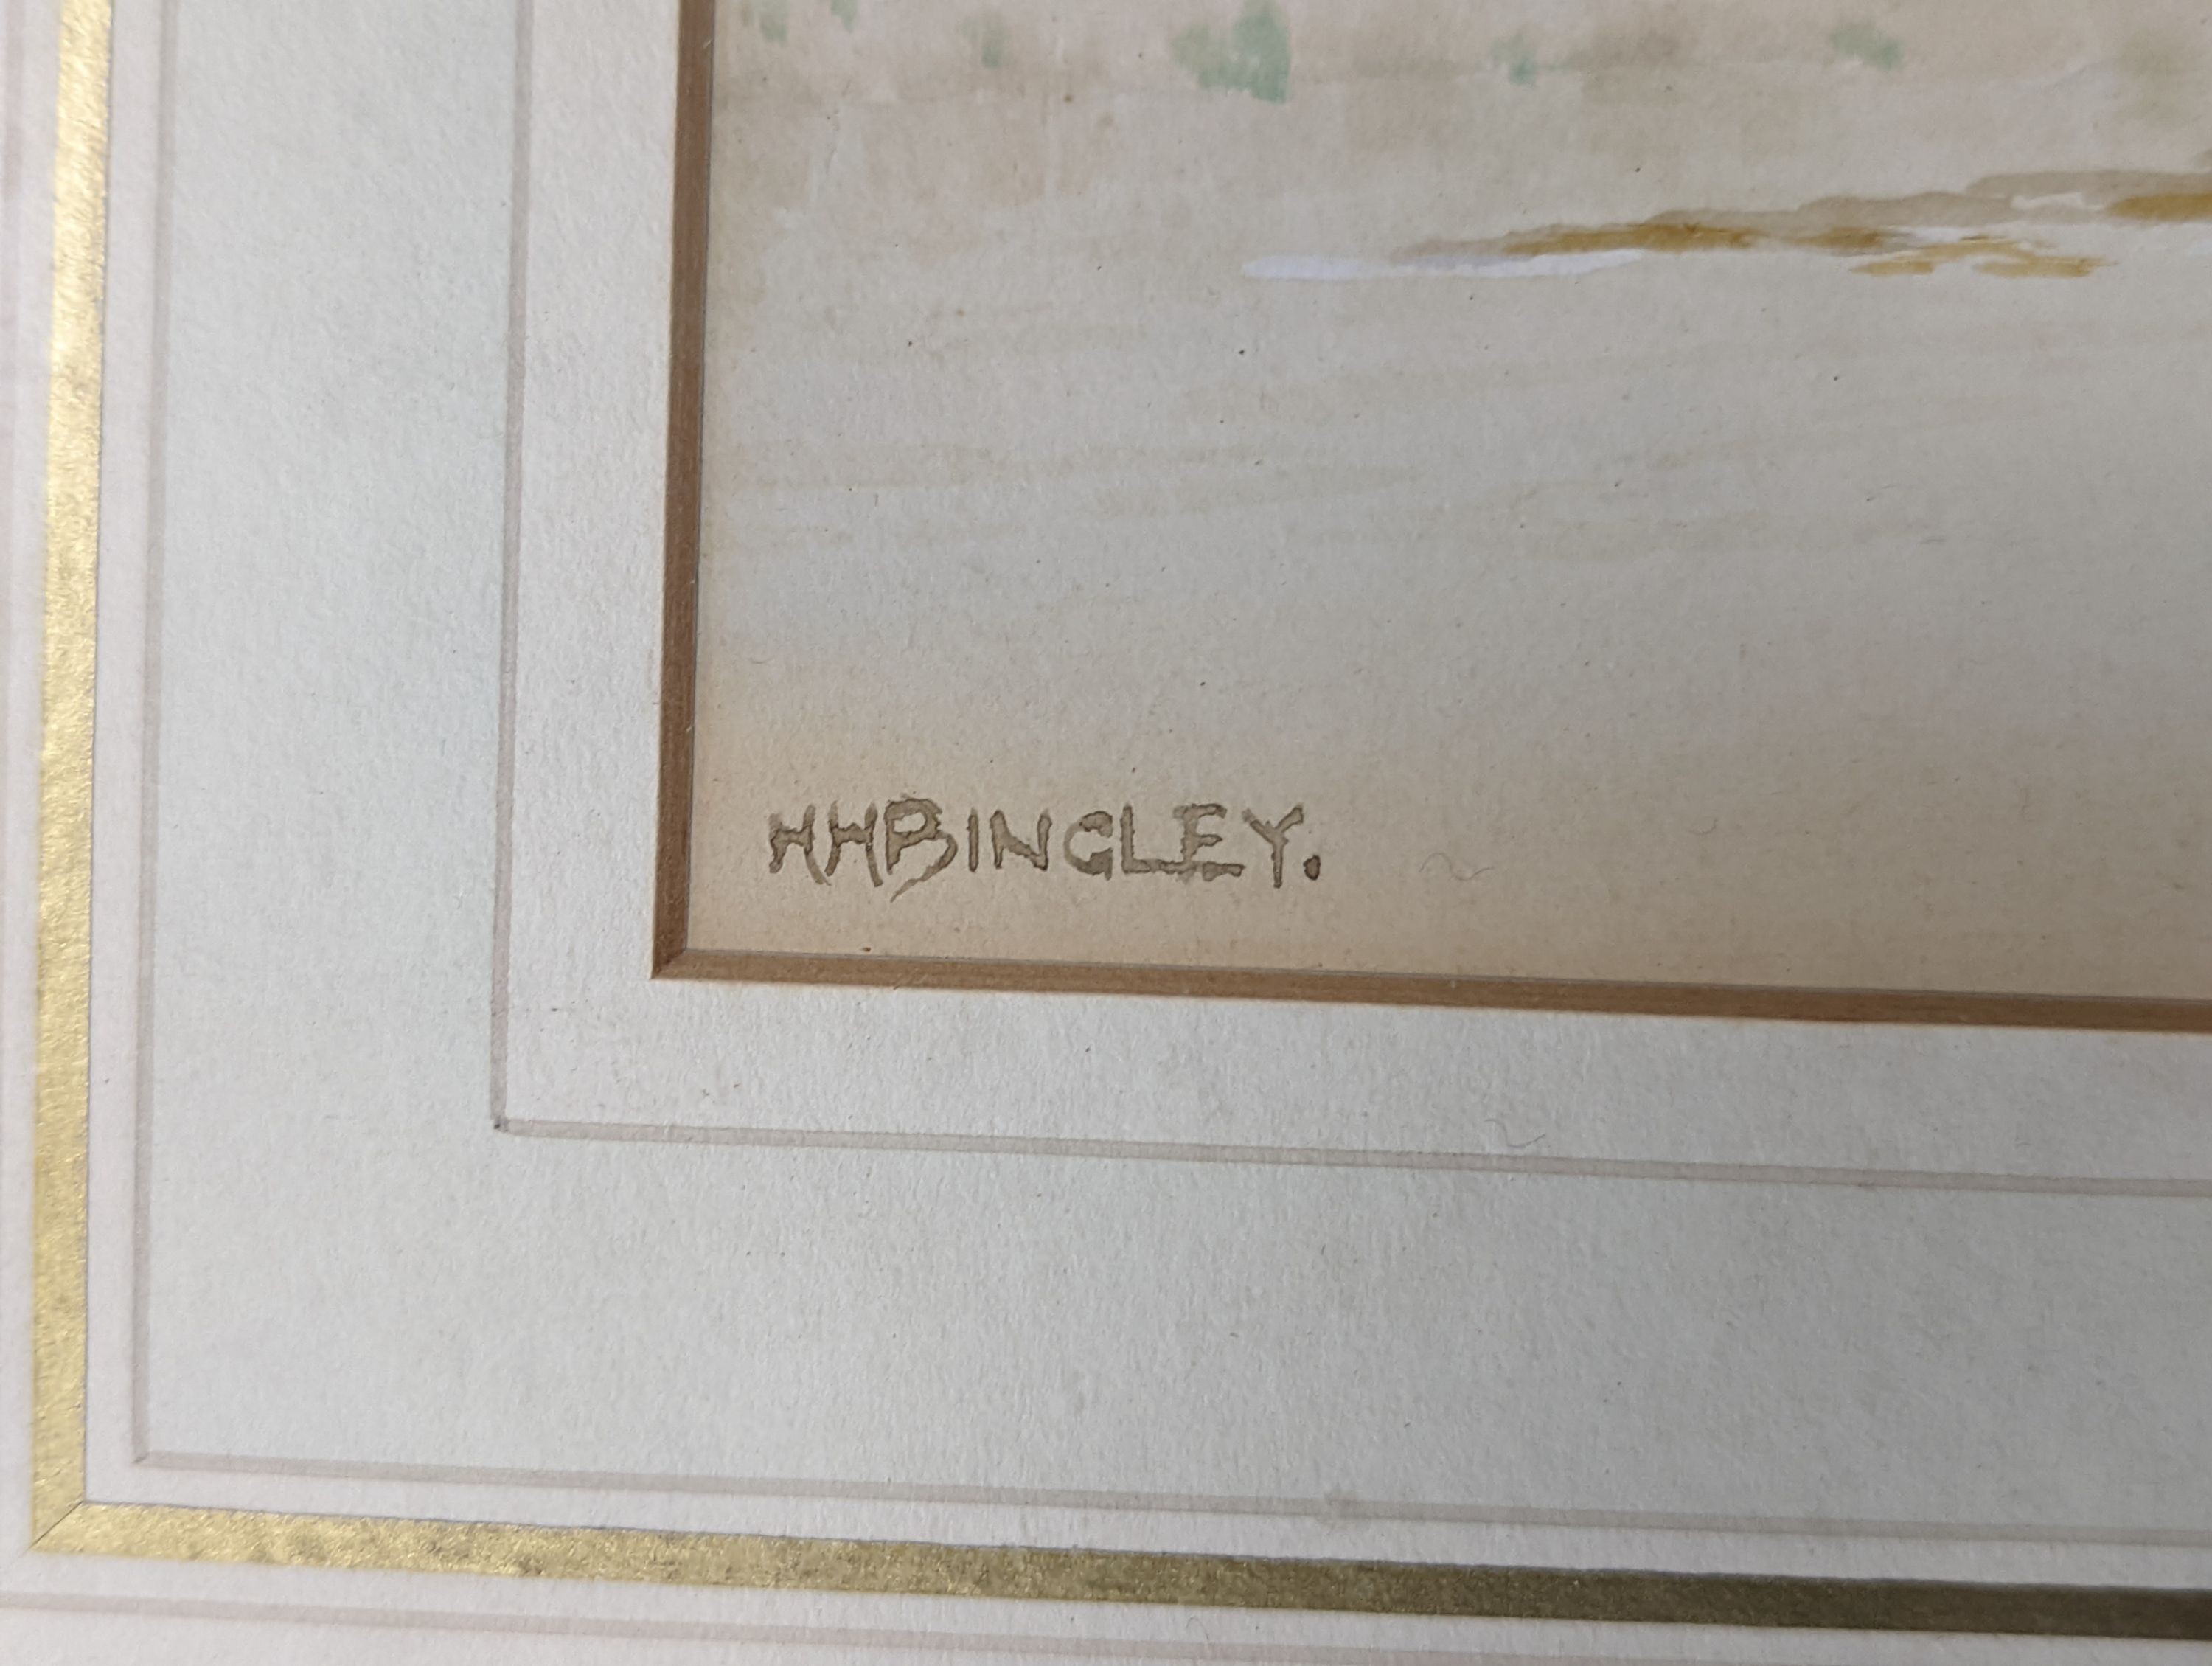 Herbert Harding Bingley (1887-1972), watercolour, Perranporth, signed, 18 x 30cm